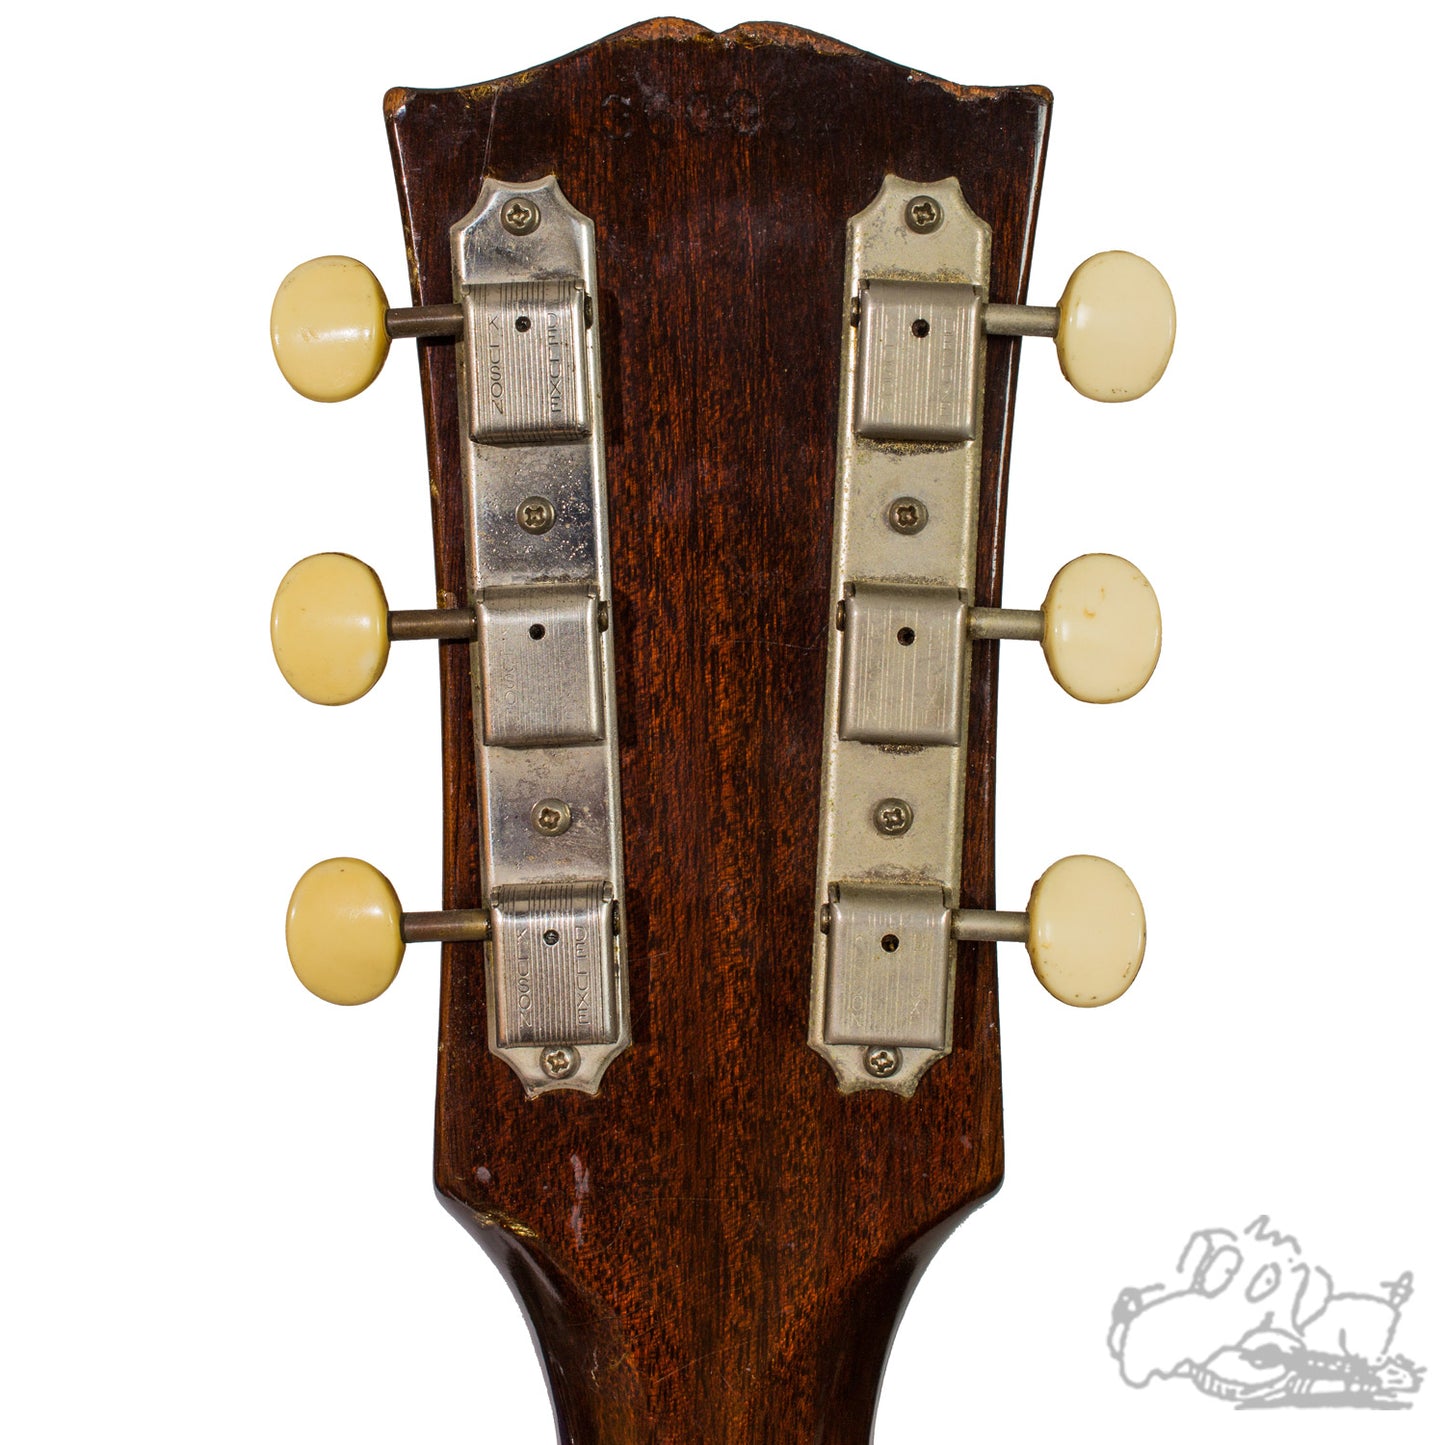 1968 Gibson J-45